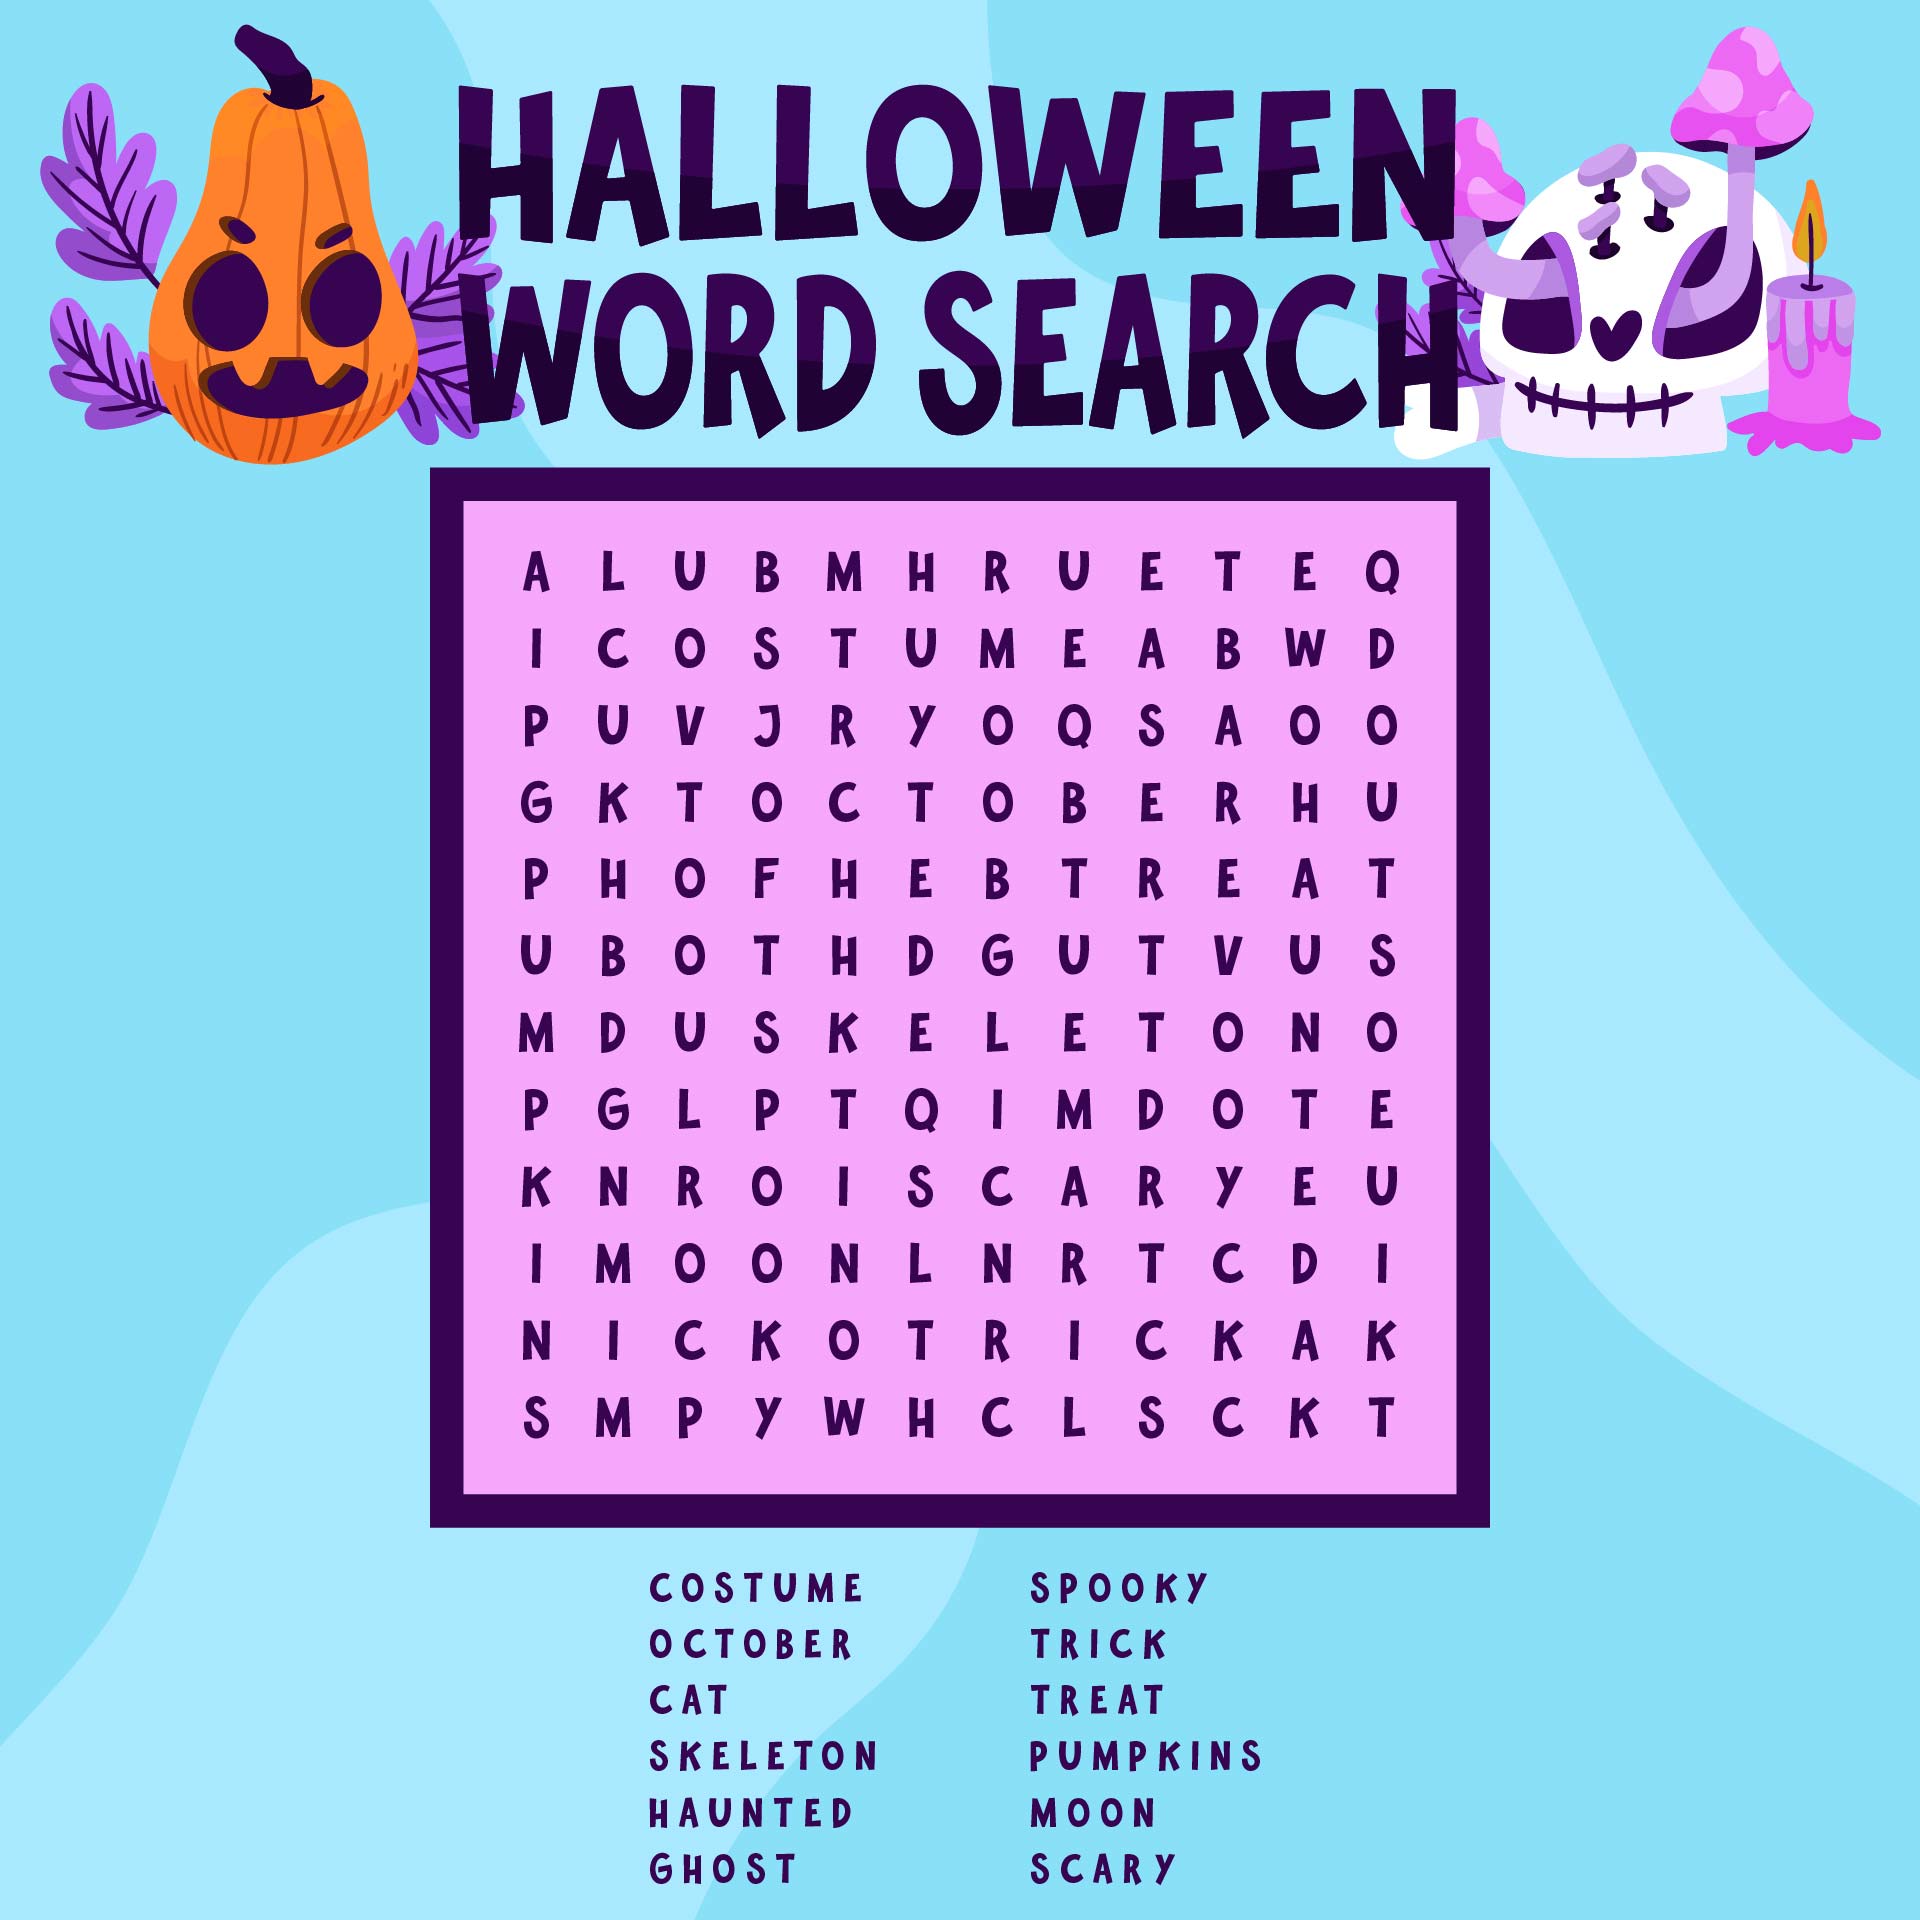 Hard Halloween Word Search Printable